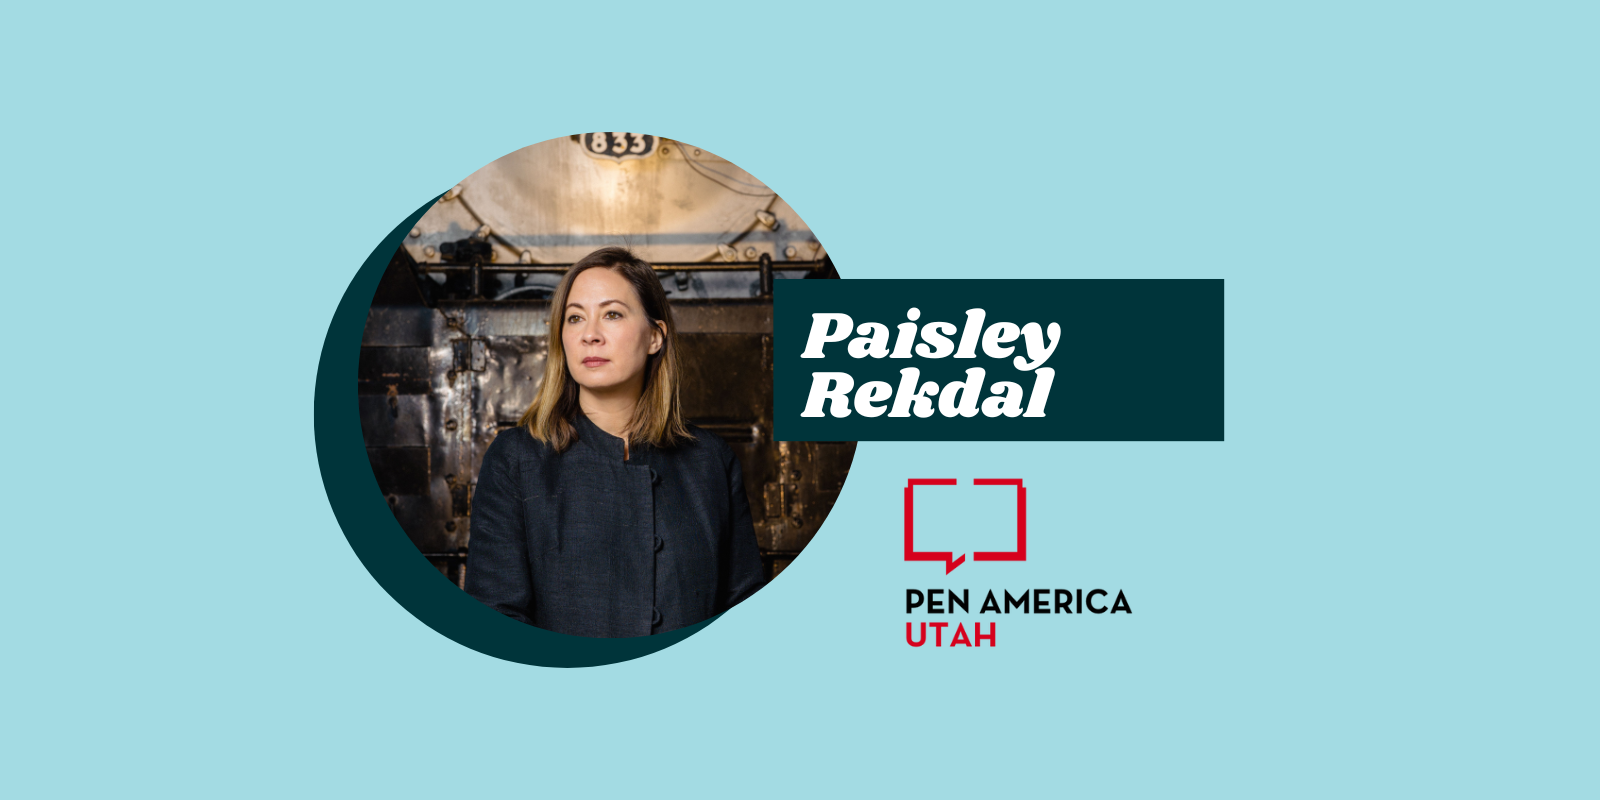 Photo of Paisley Rekdal with PEN UTAH logo next to her image.